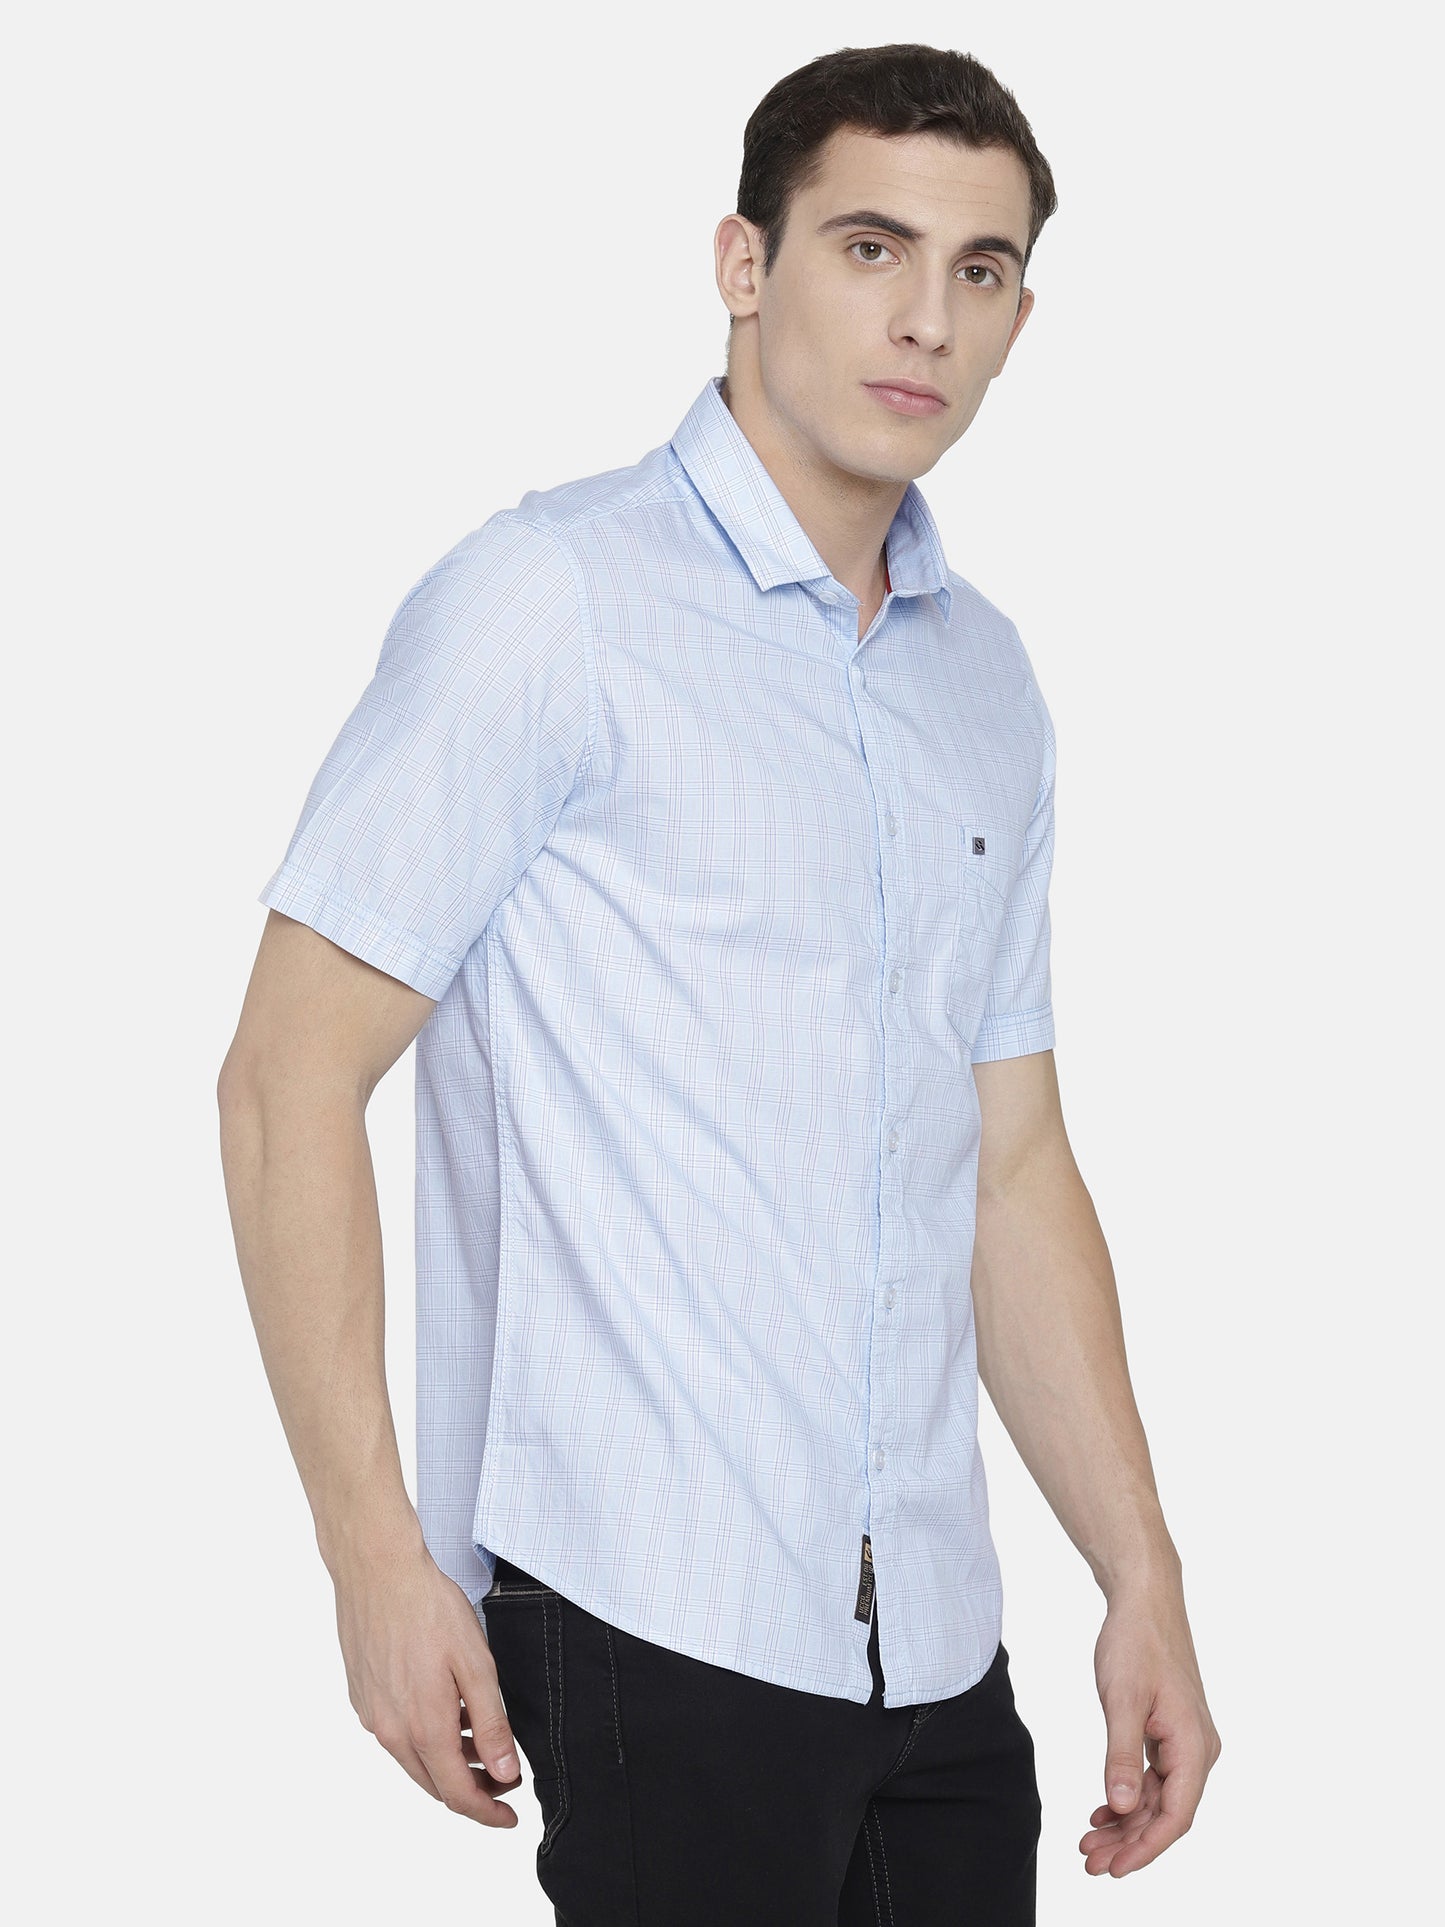 White and Light Blue Checkered Shirt